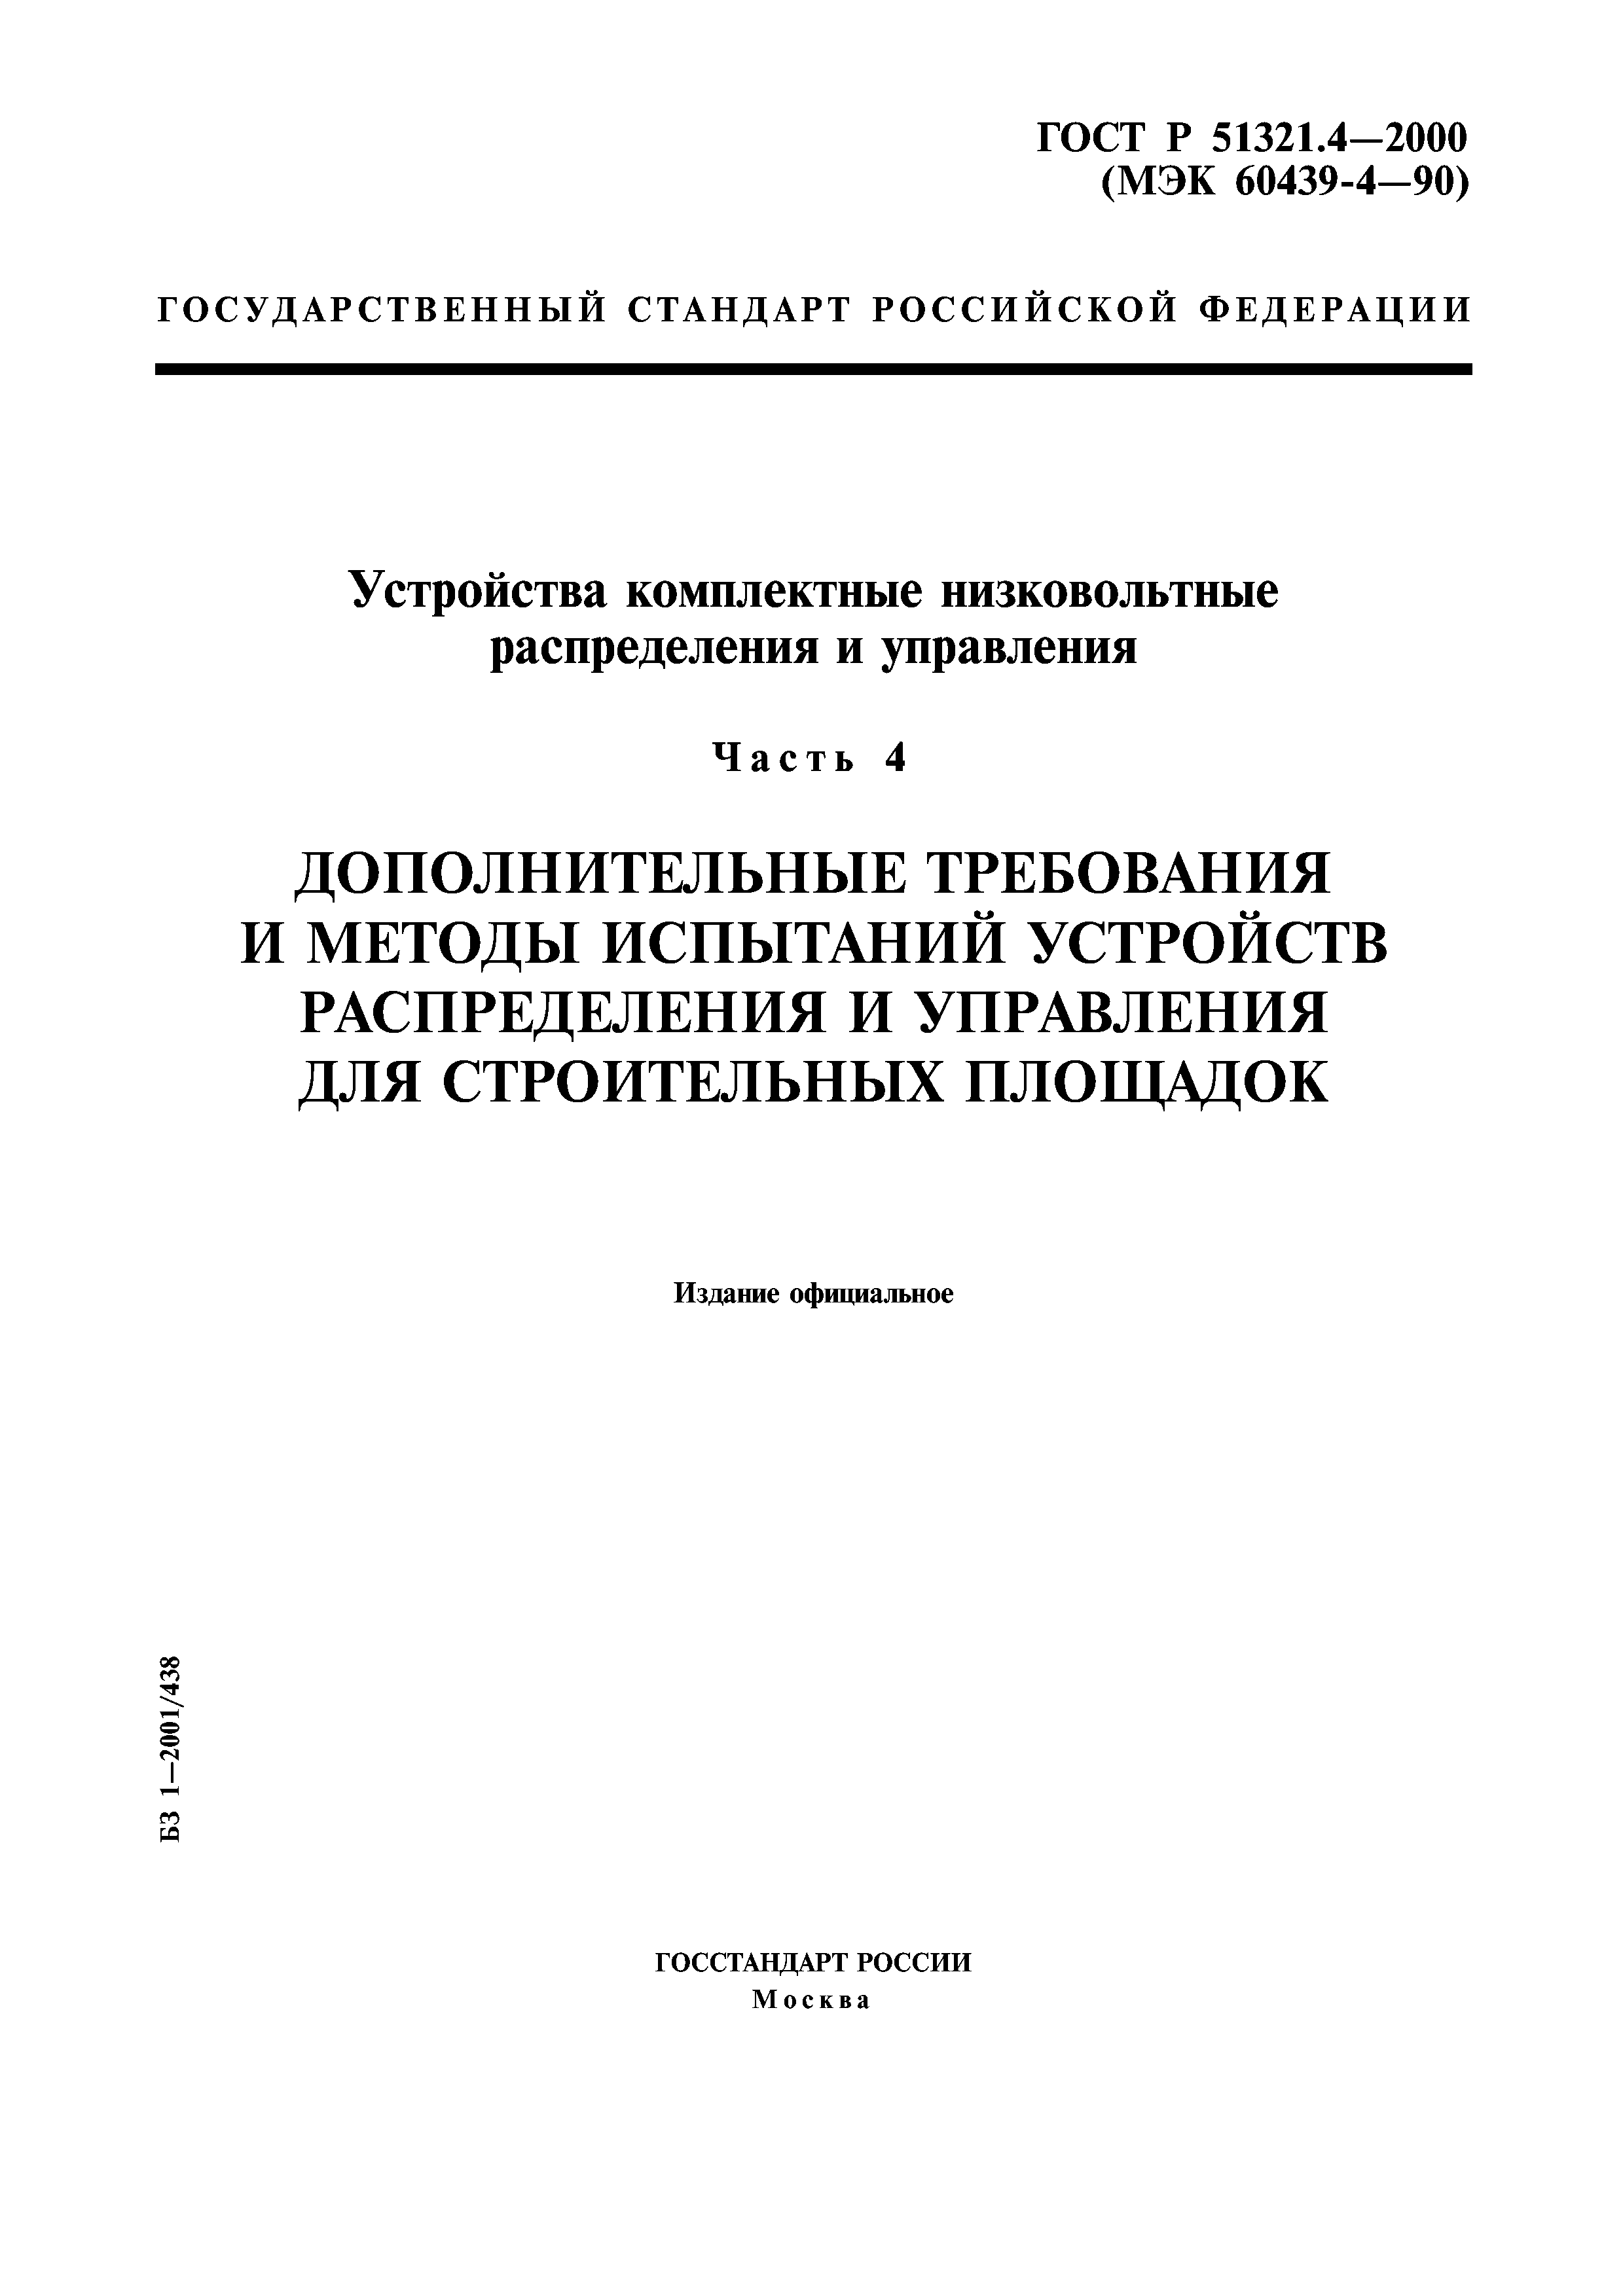 ГОСТ Р 51321.4-2000